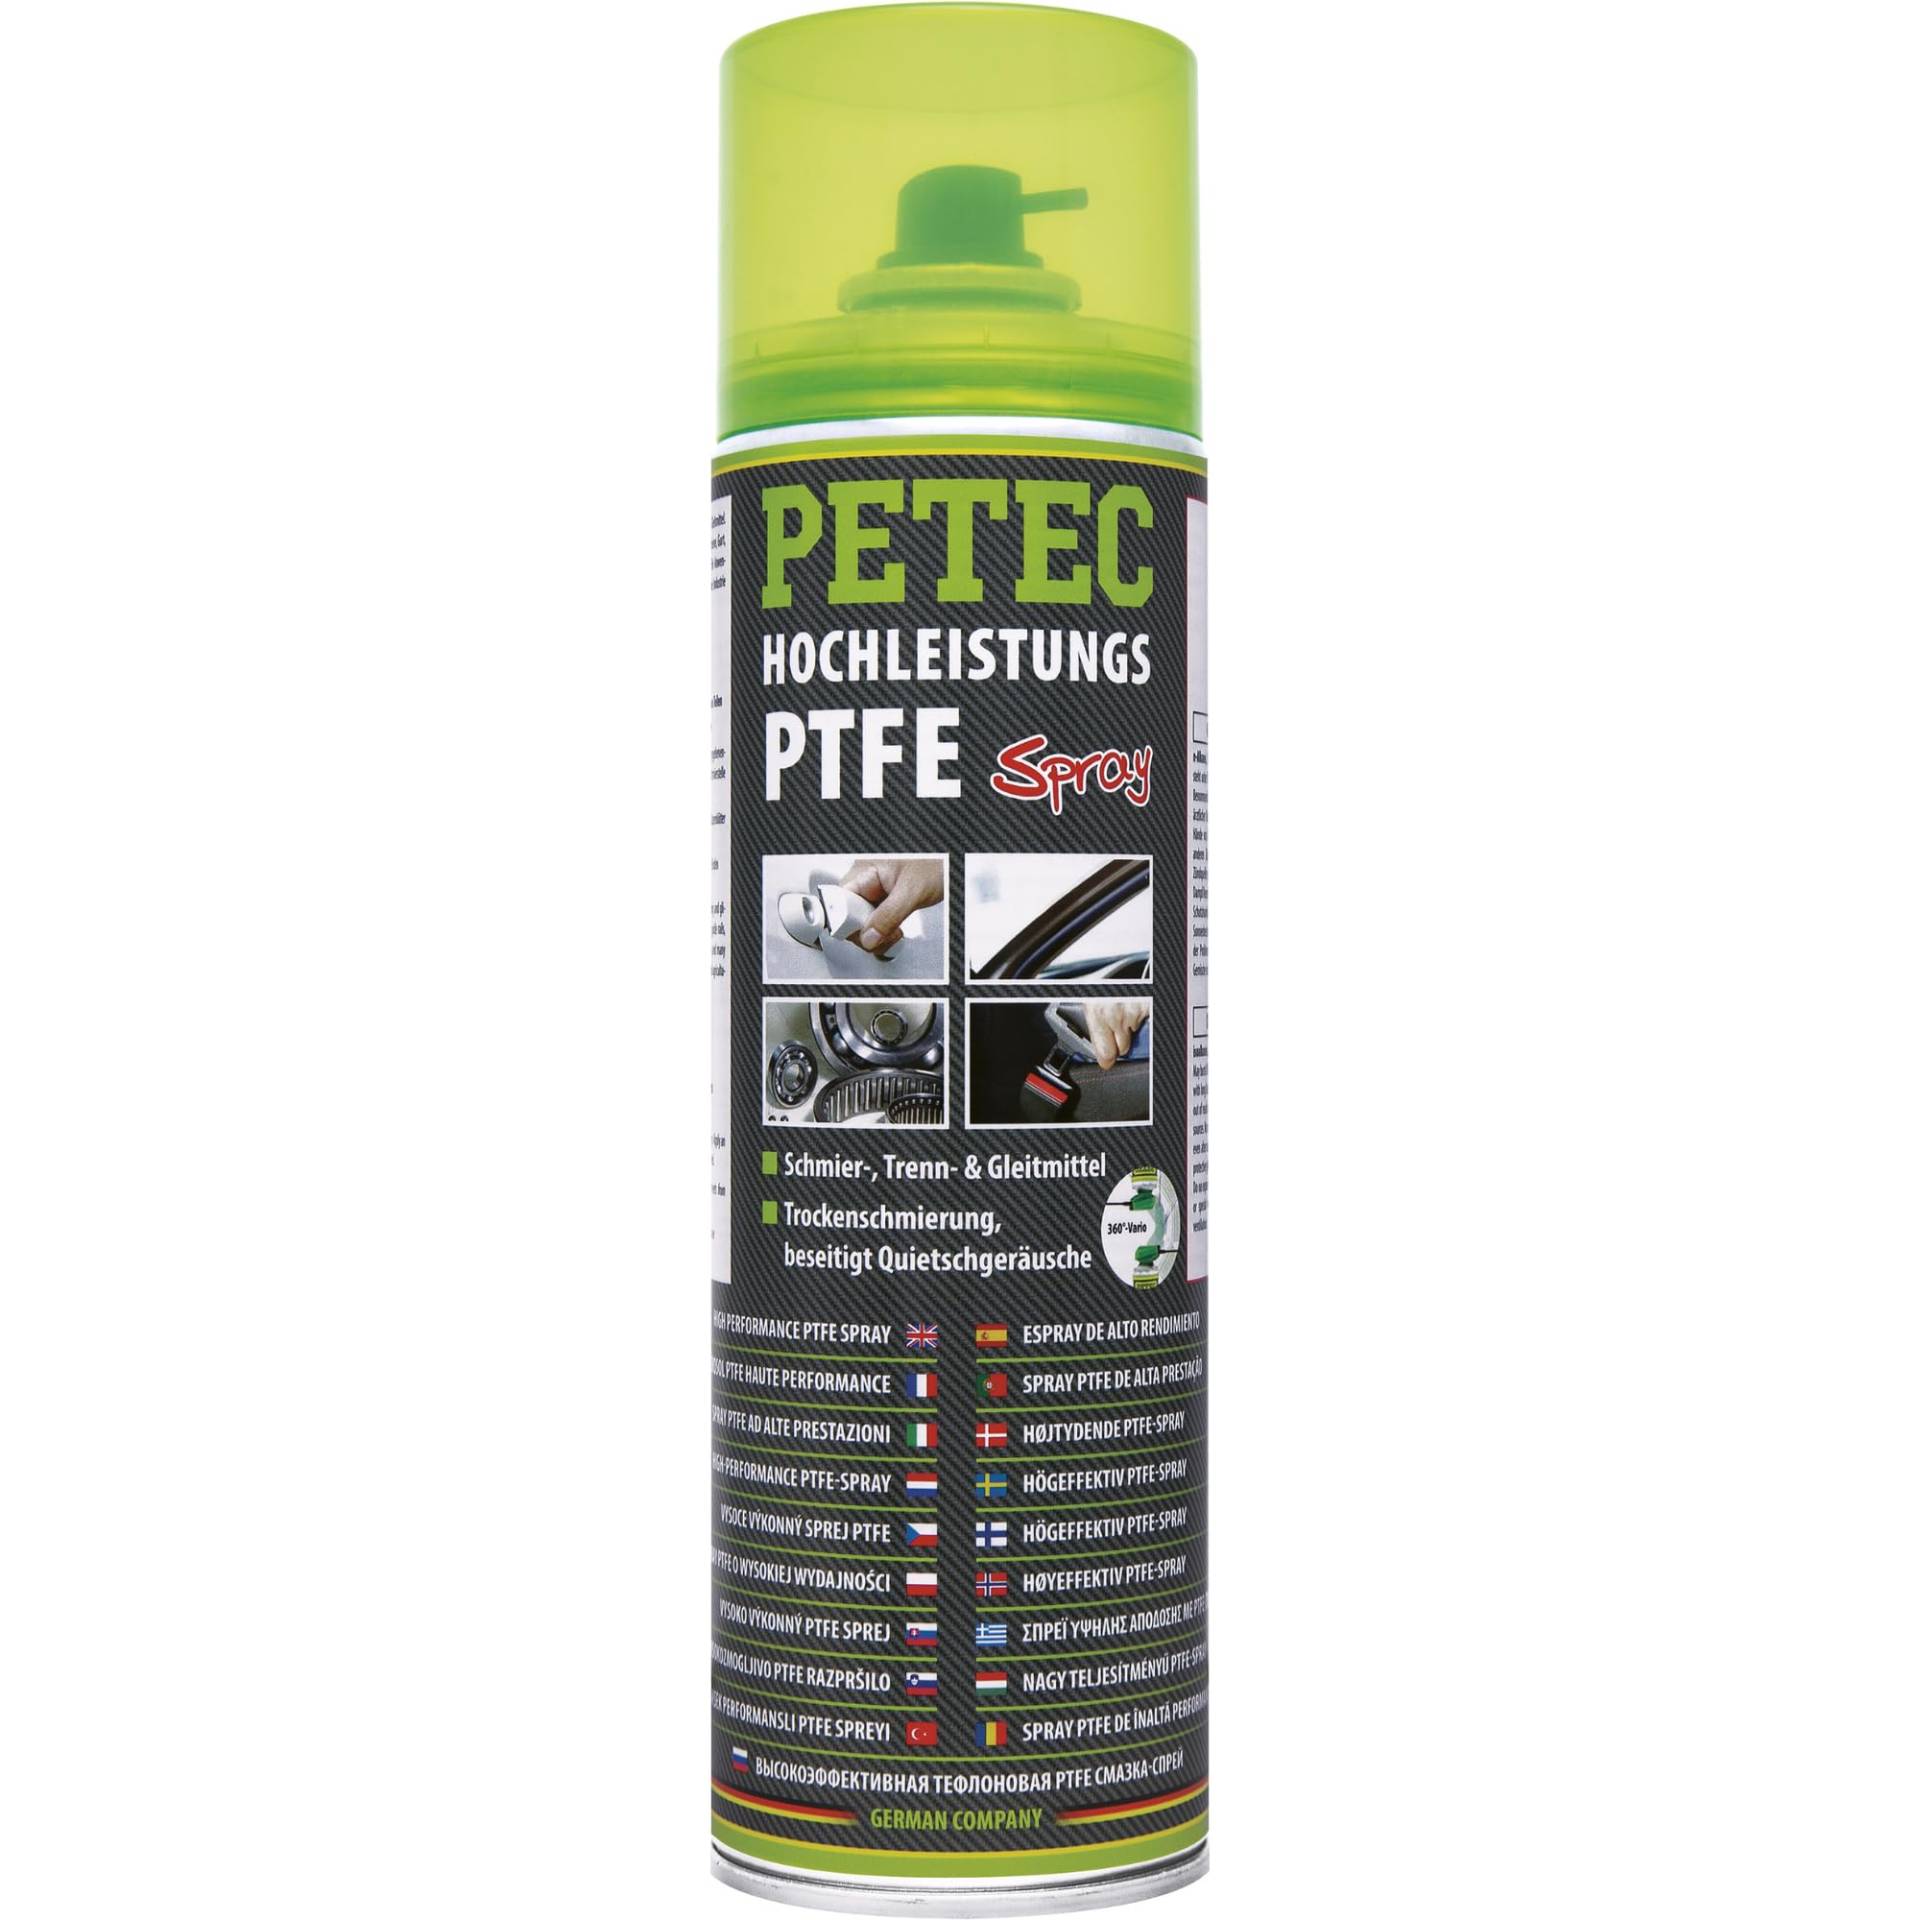 PETEC Hochleistungs PTFE-Spray, 500ml 74050 von PETEC